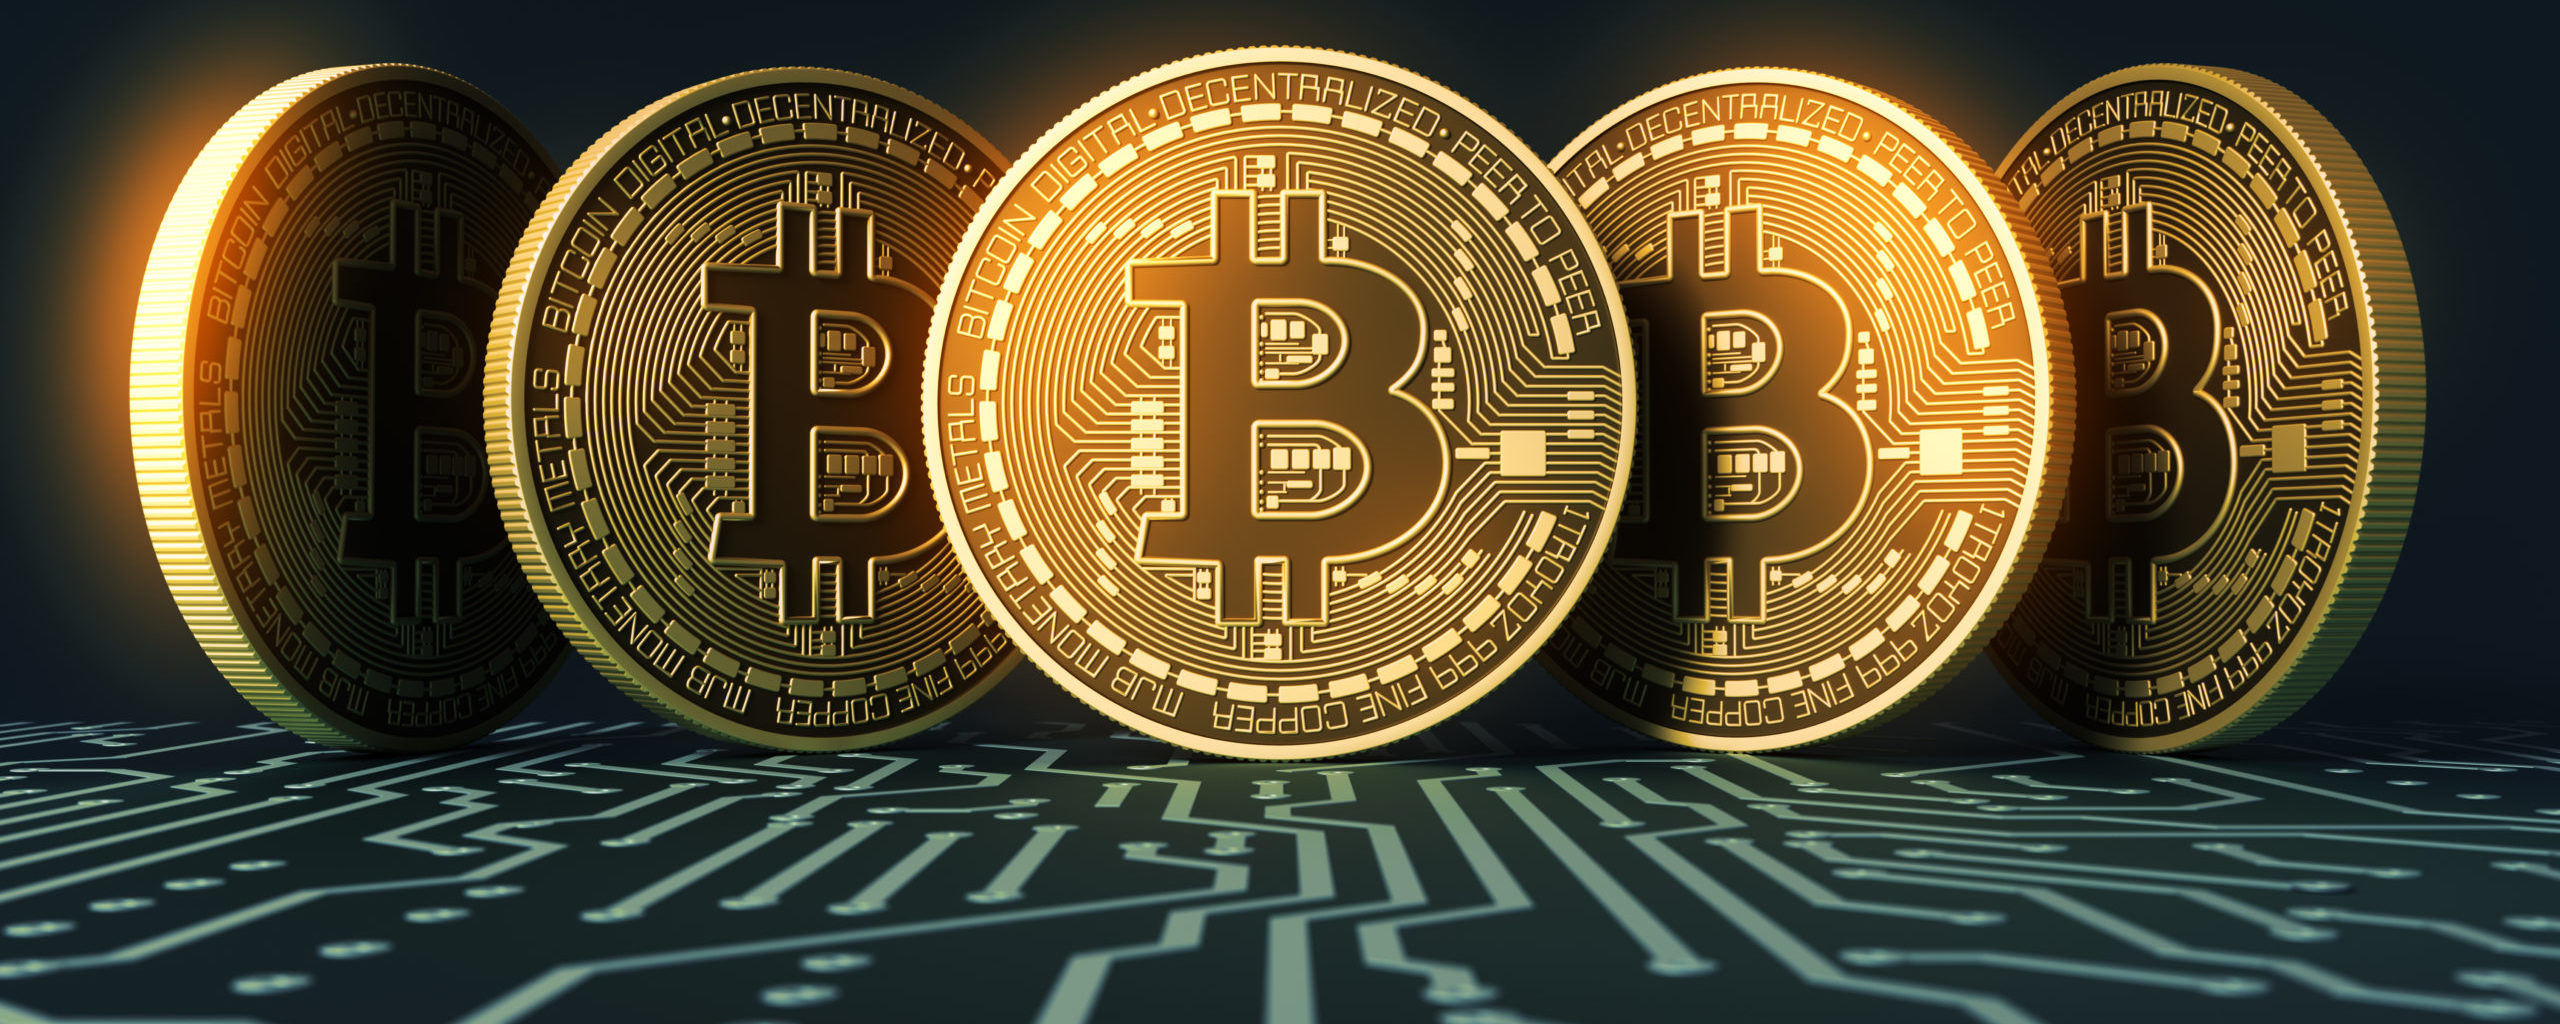 Hack de bitcoins worth crypto candlestick data